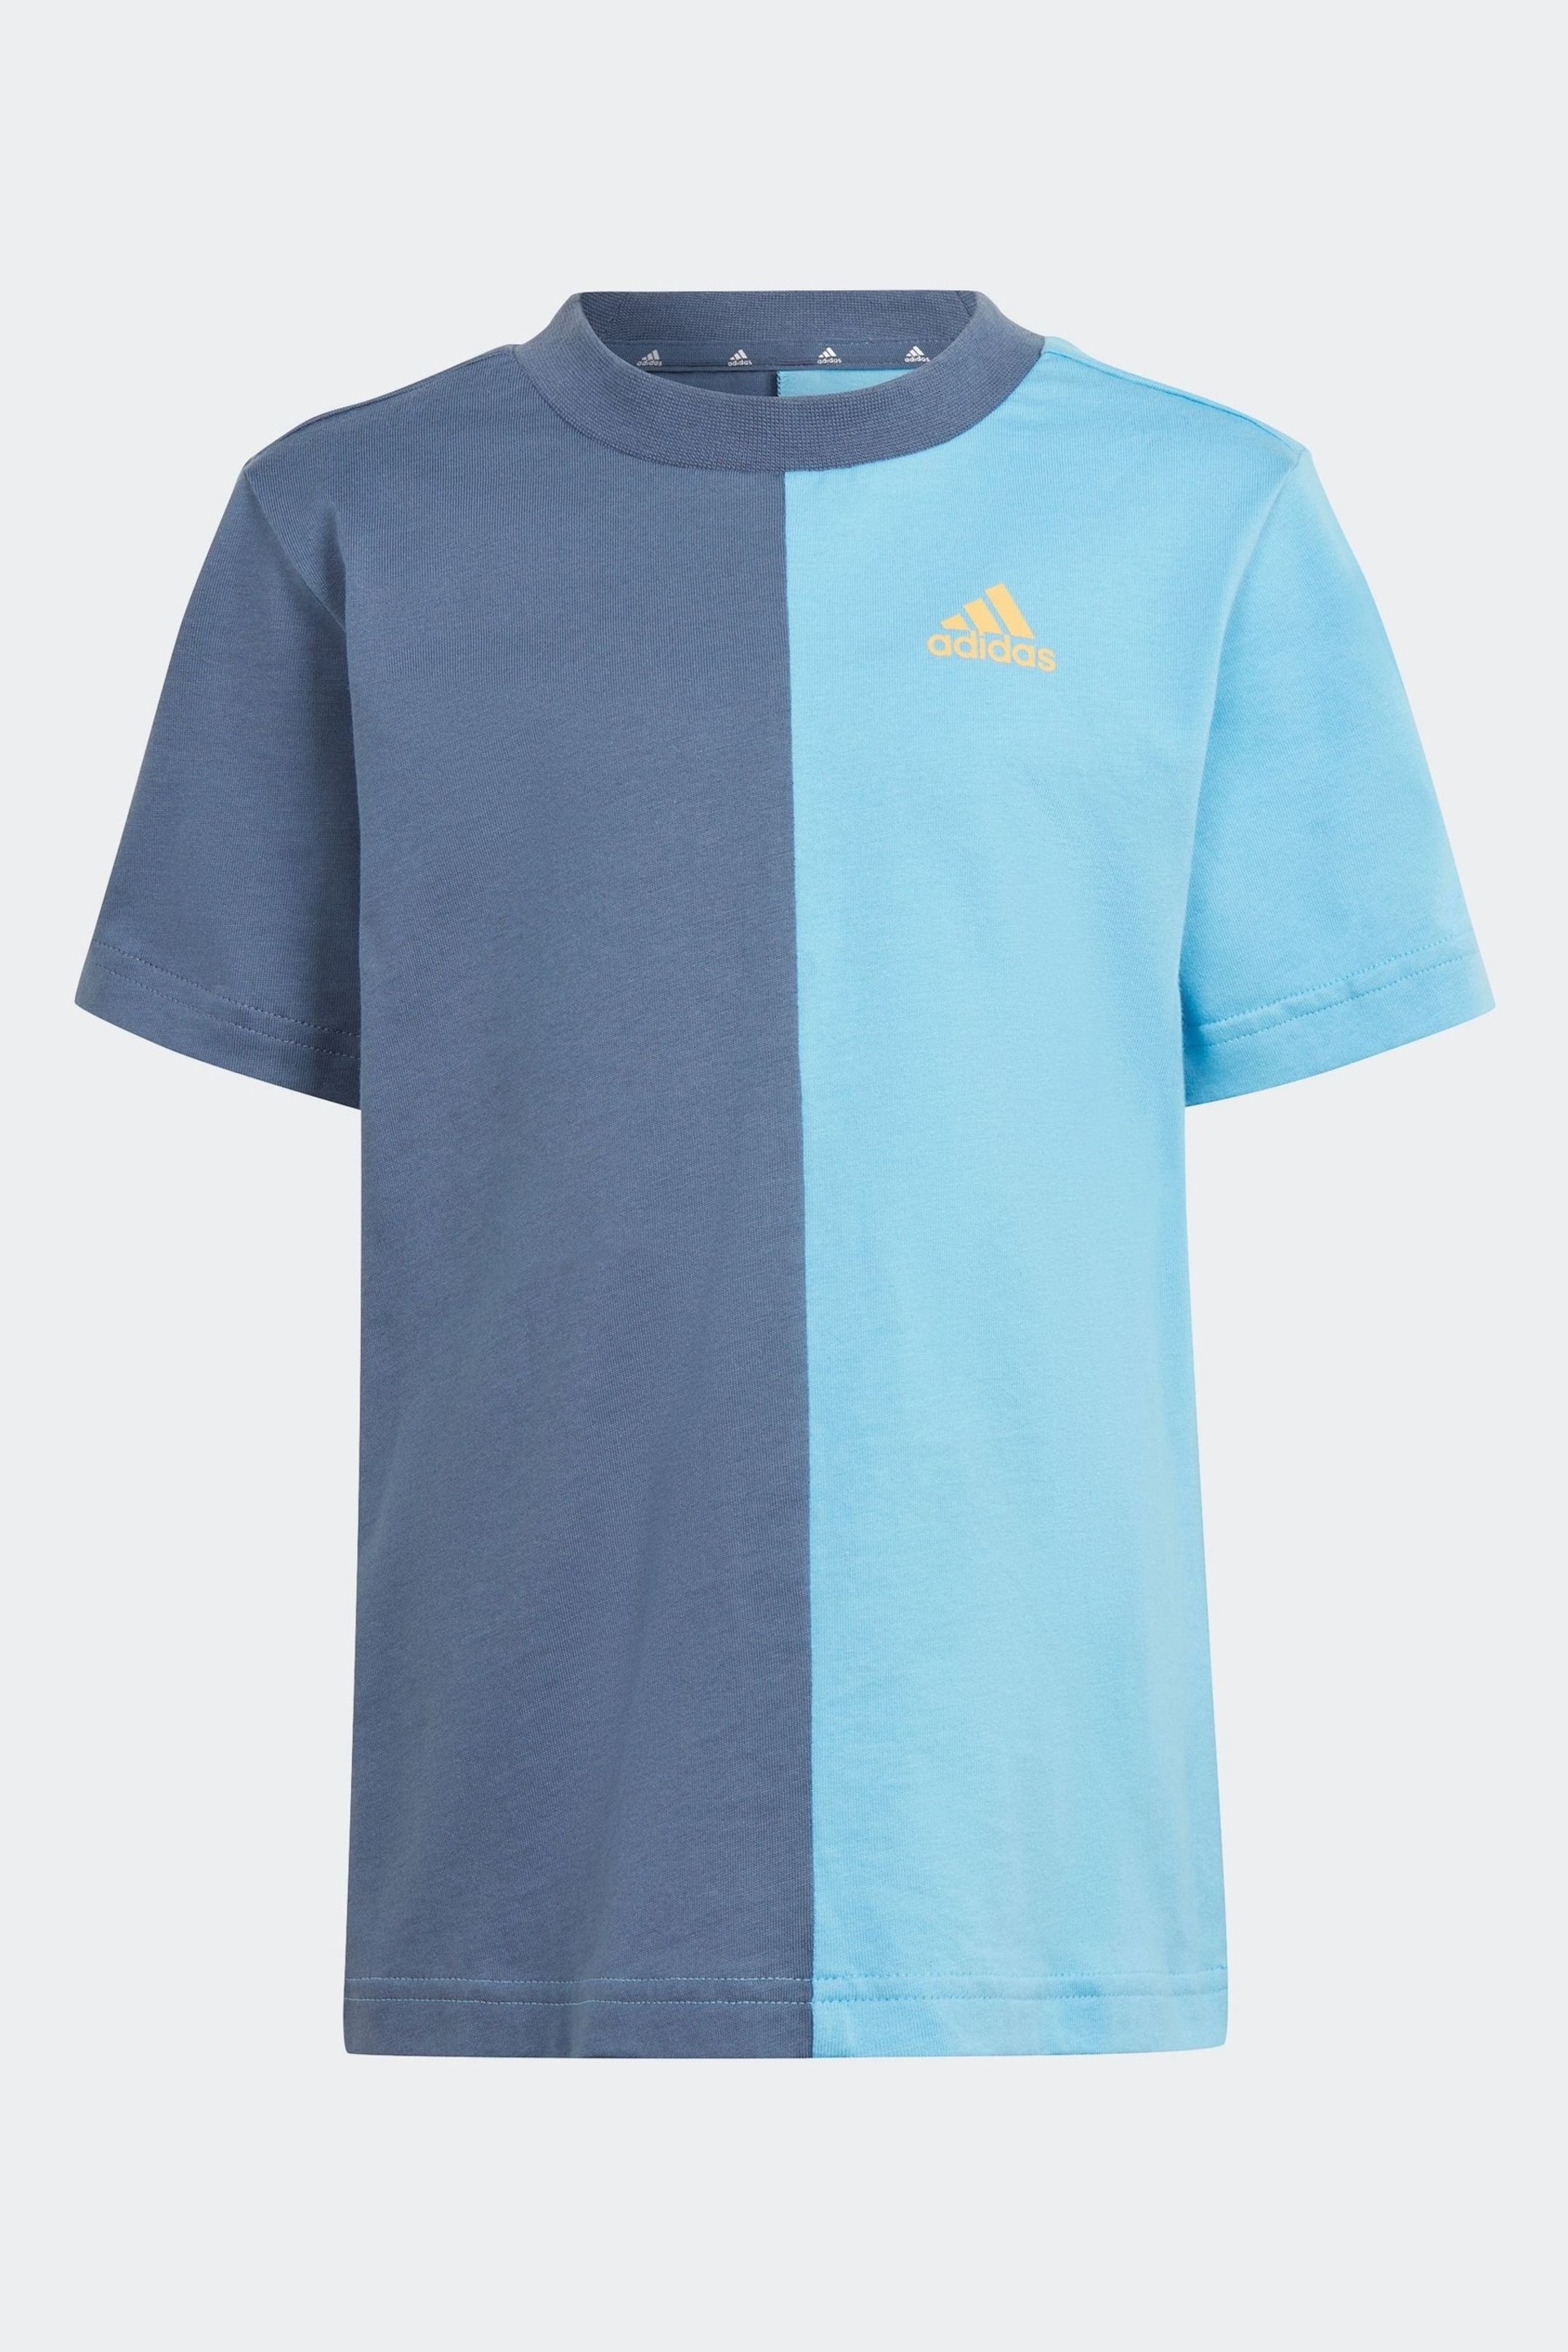 adidas Blue Sportswear T-Shirt and Shorts Set - Image 8 of 11